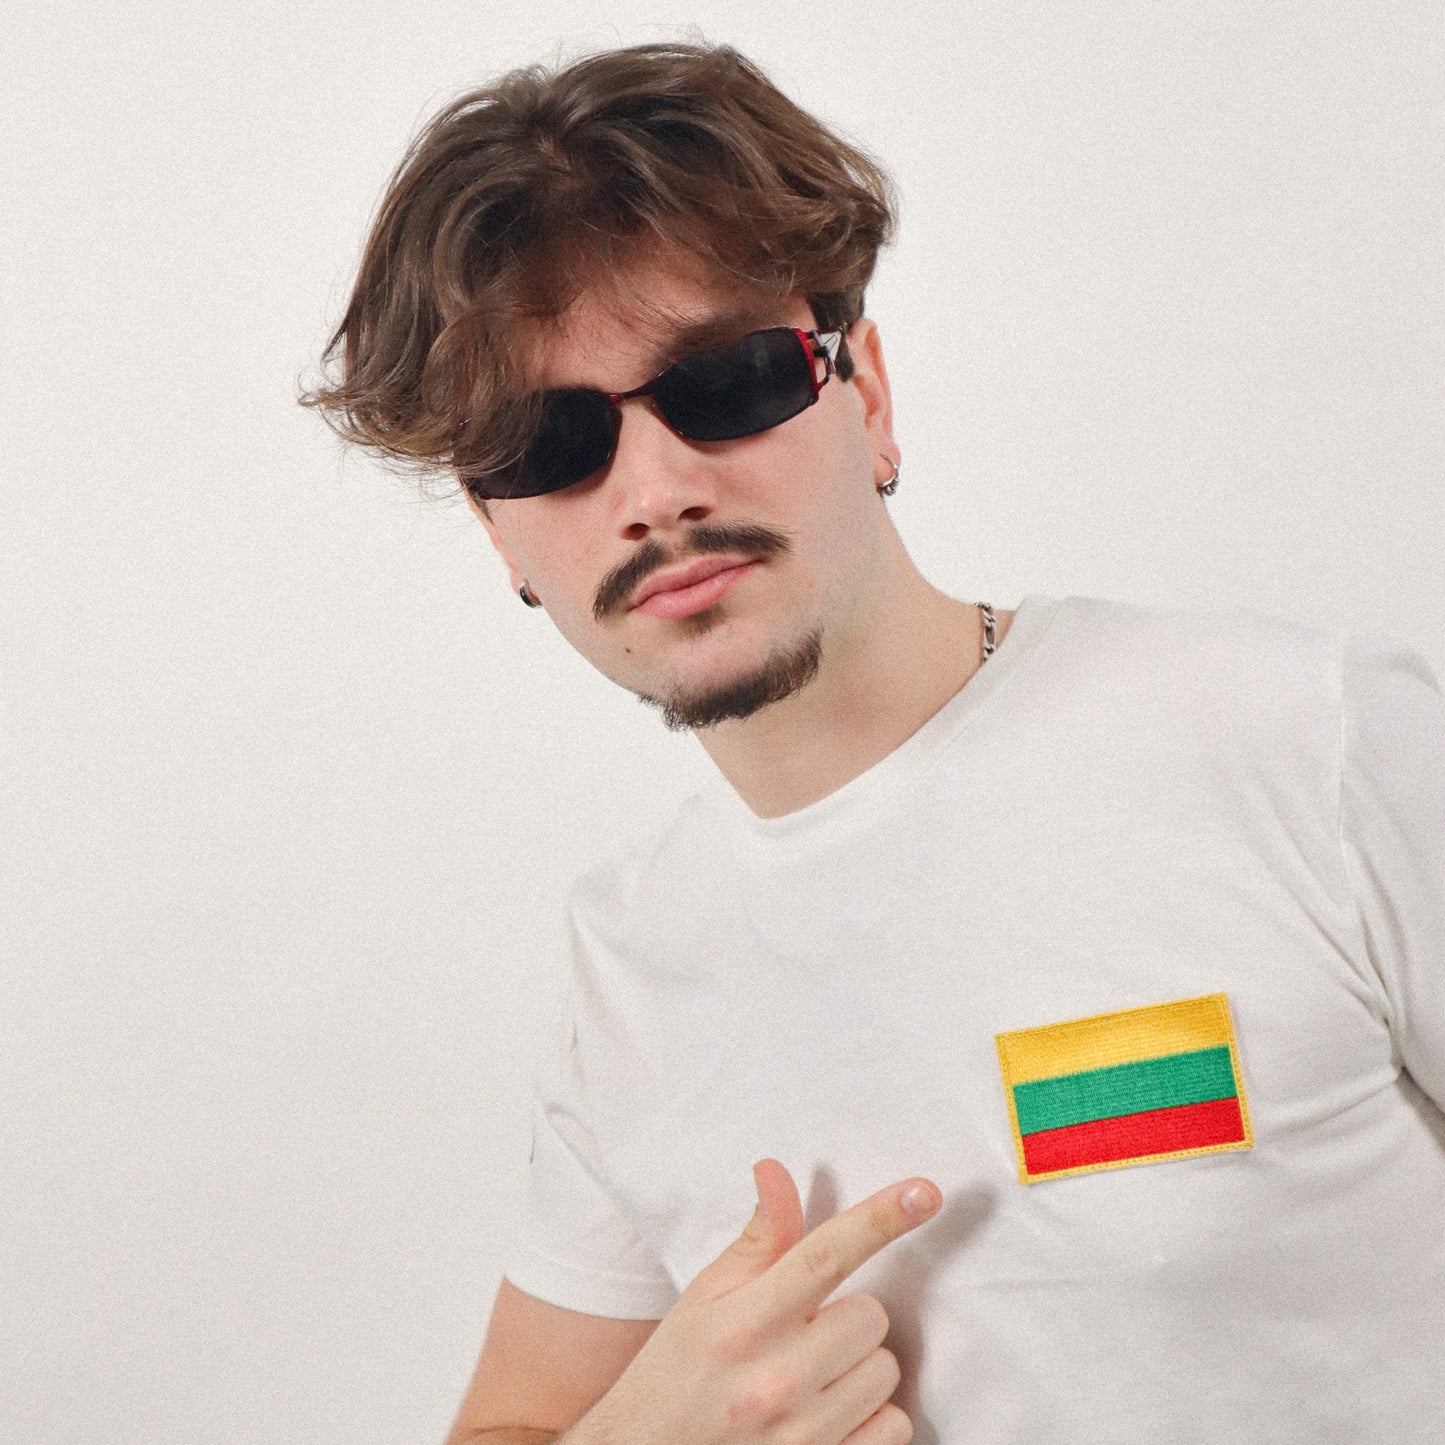 Lithuania • T-shirt